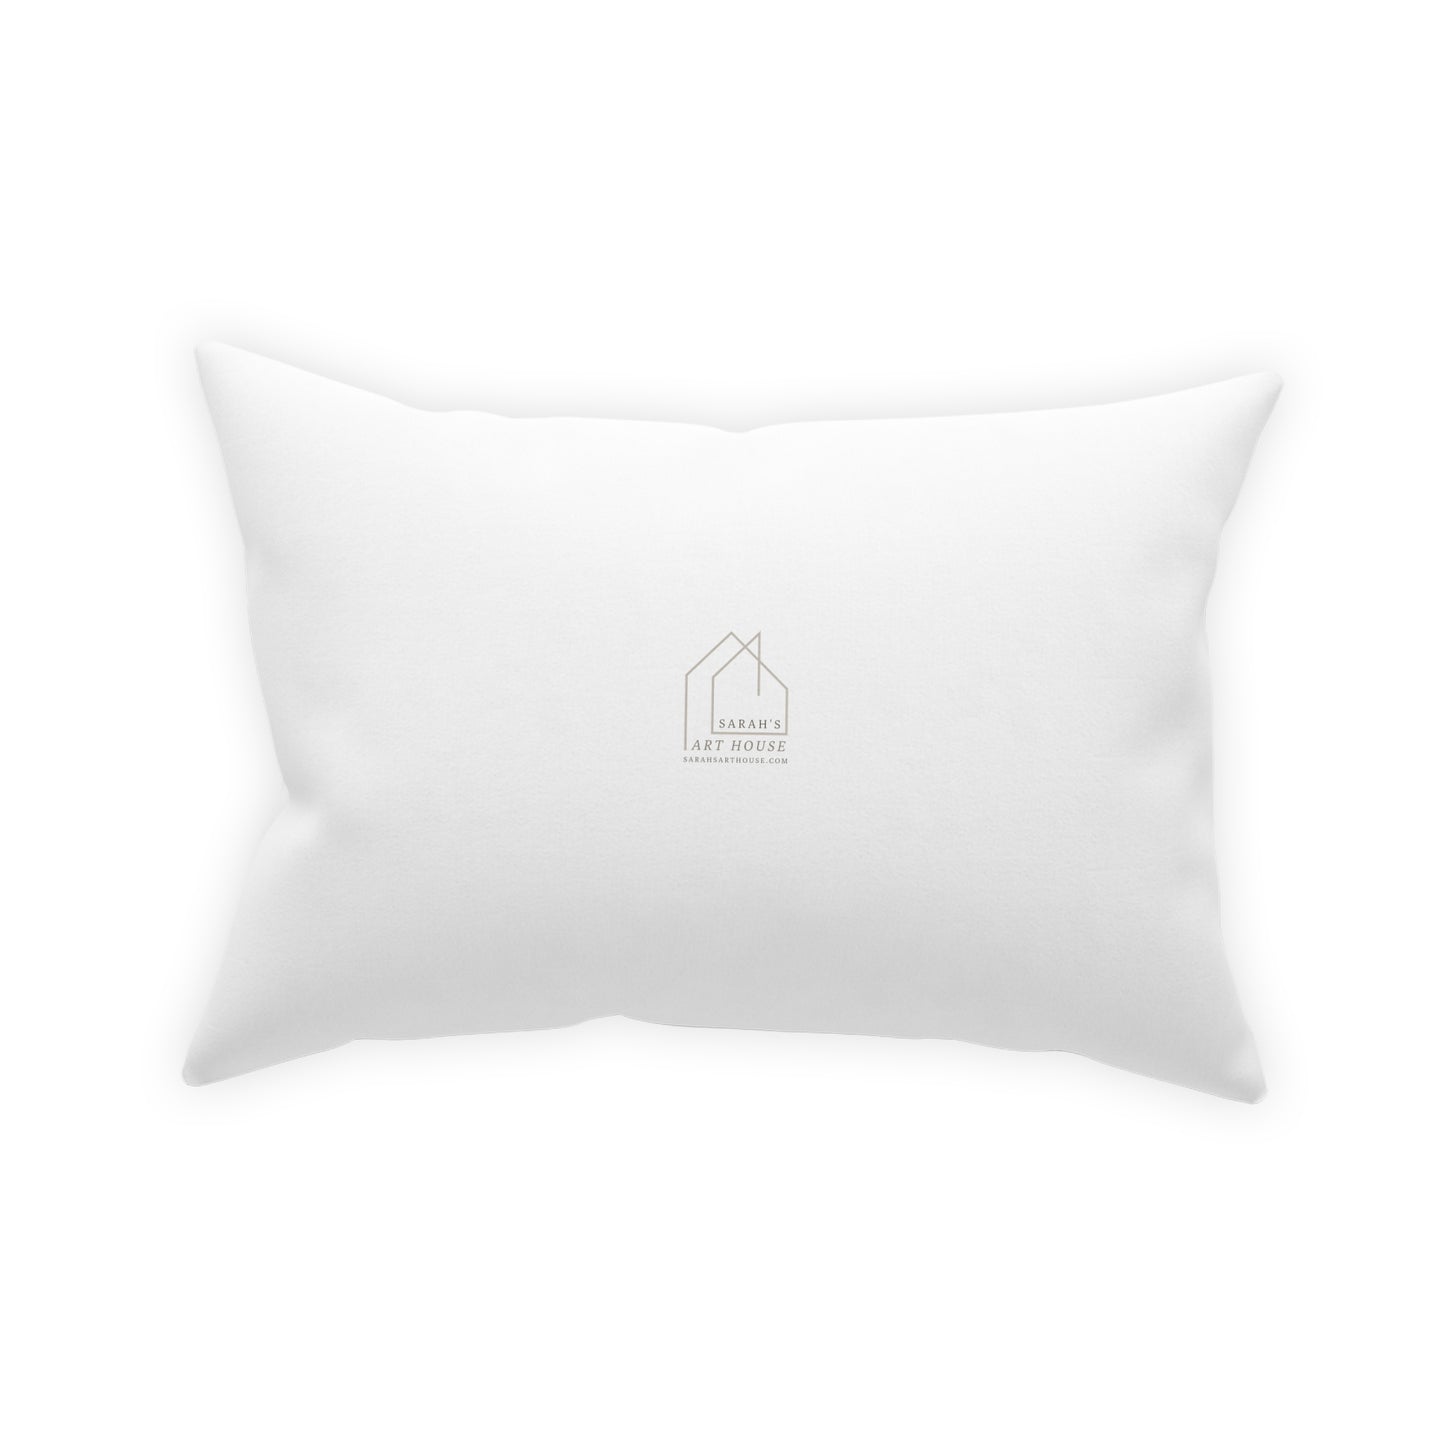 White Lumber Pillow - Equestrian Lumber Pillow - Stamina Original Art Throw Pillow - Throw pillow for couch